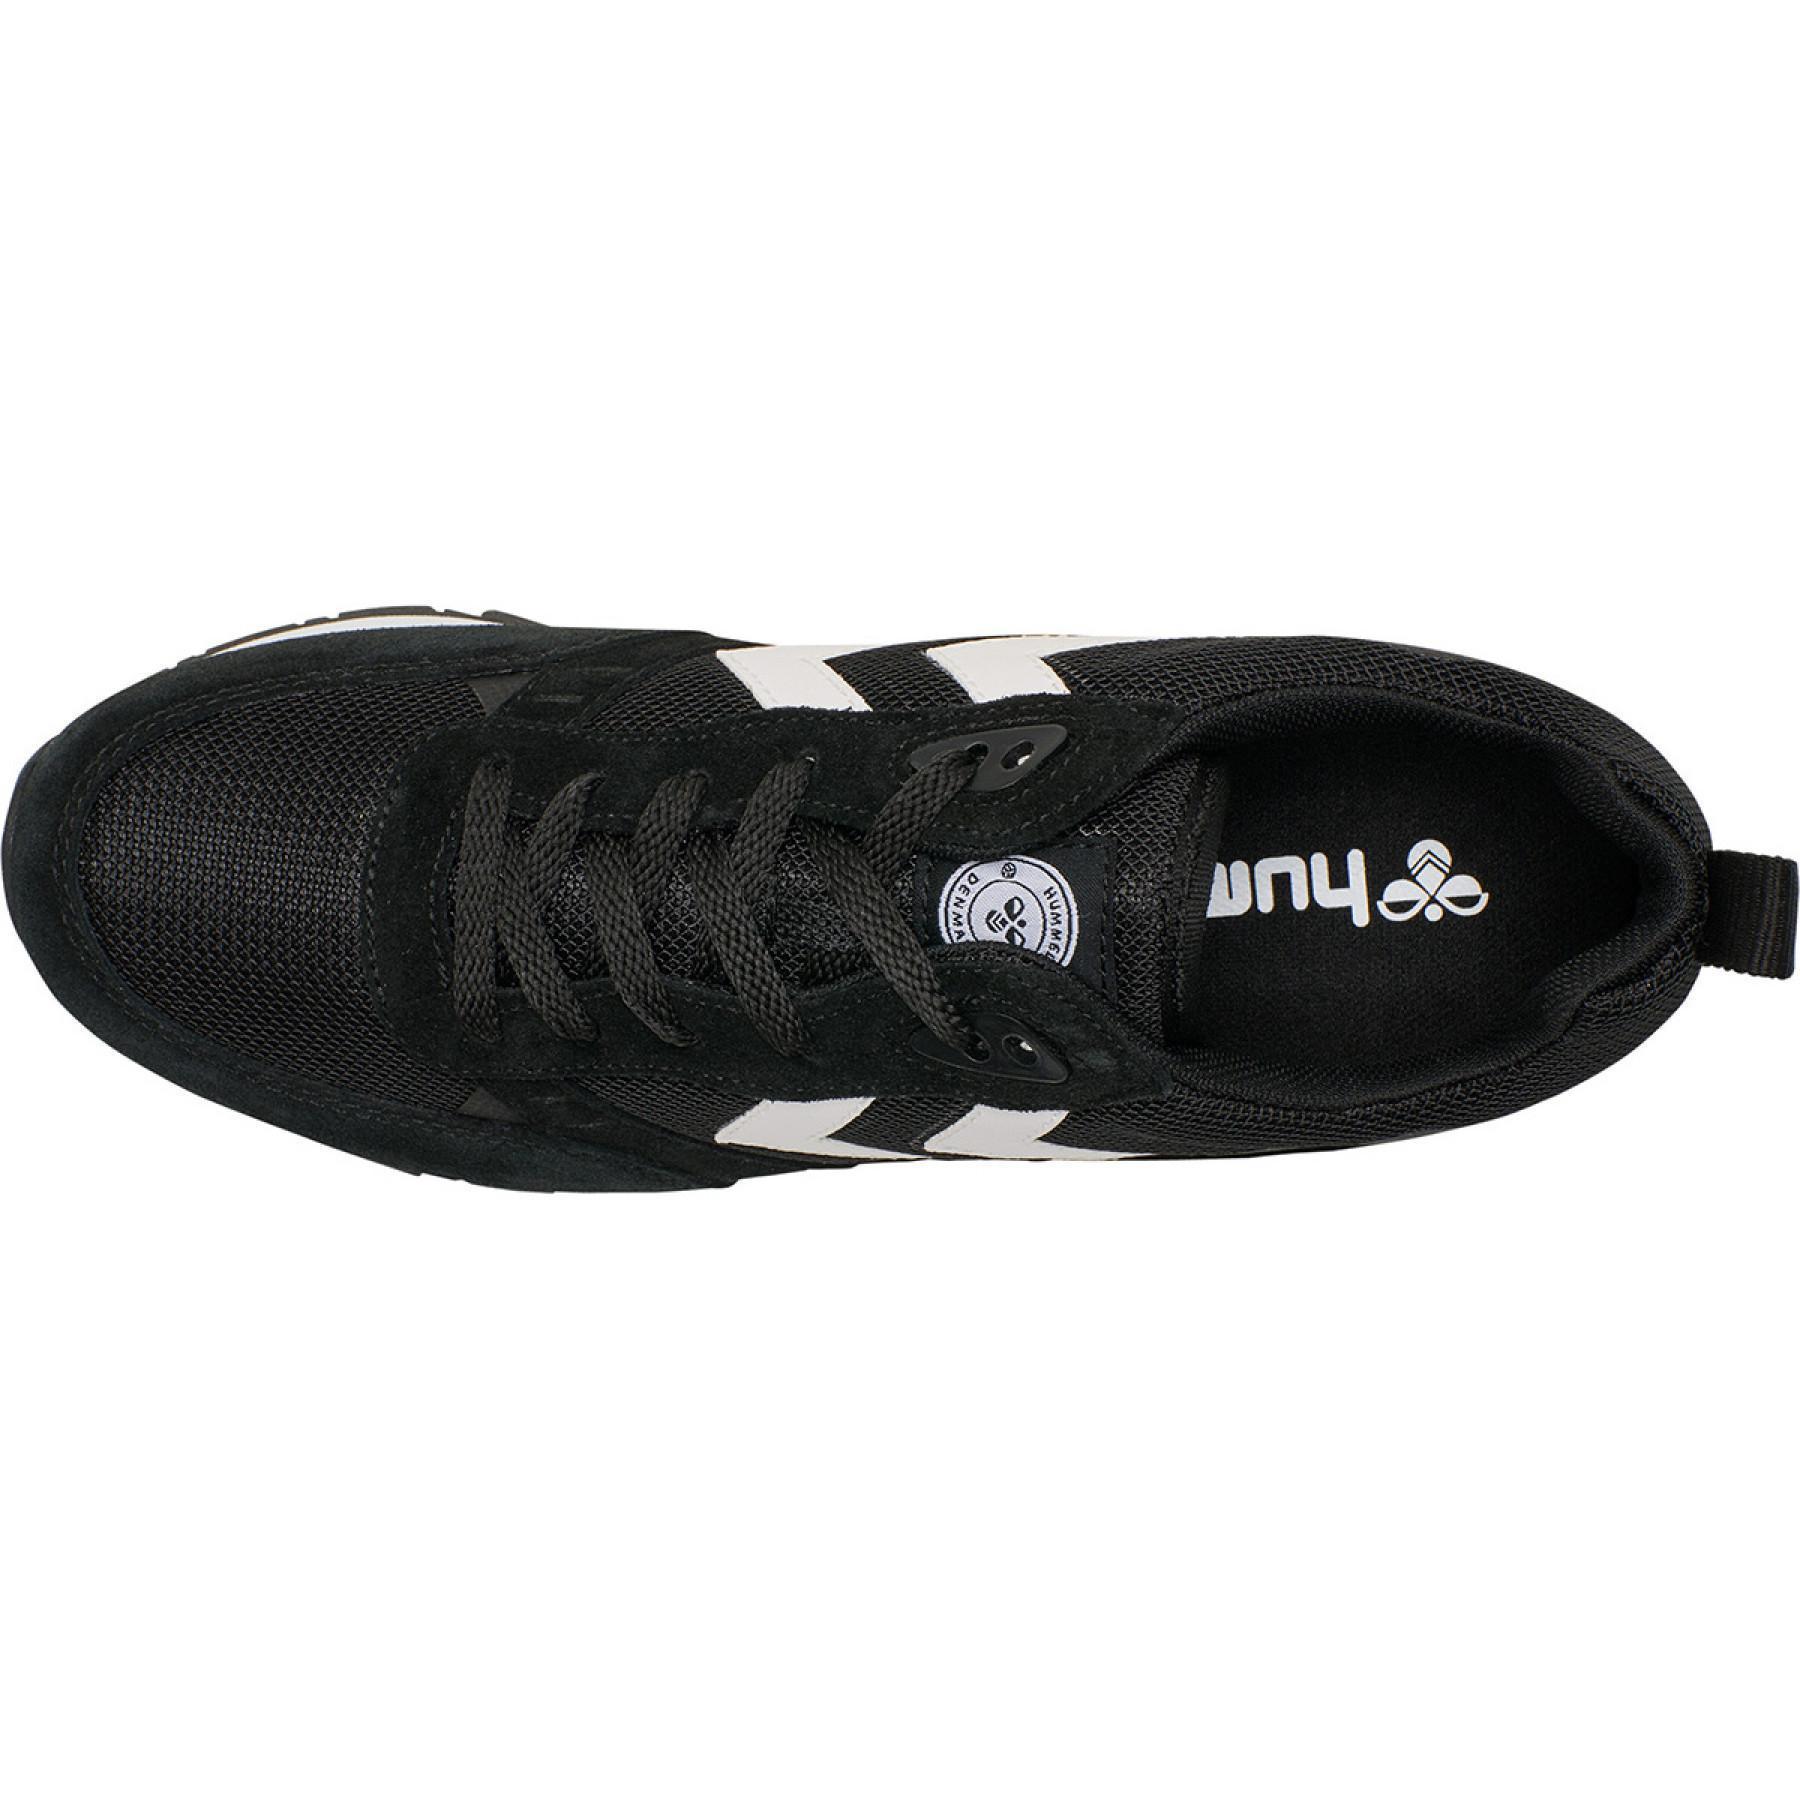 Zapatillas Hummel thor - Hummel - Sneakers de hombre - Lifestyle